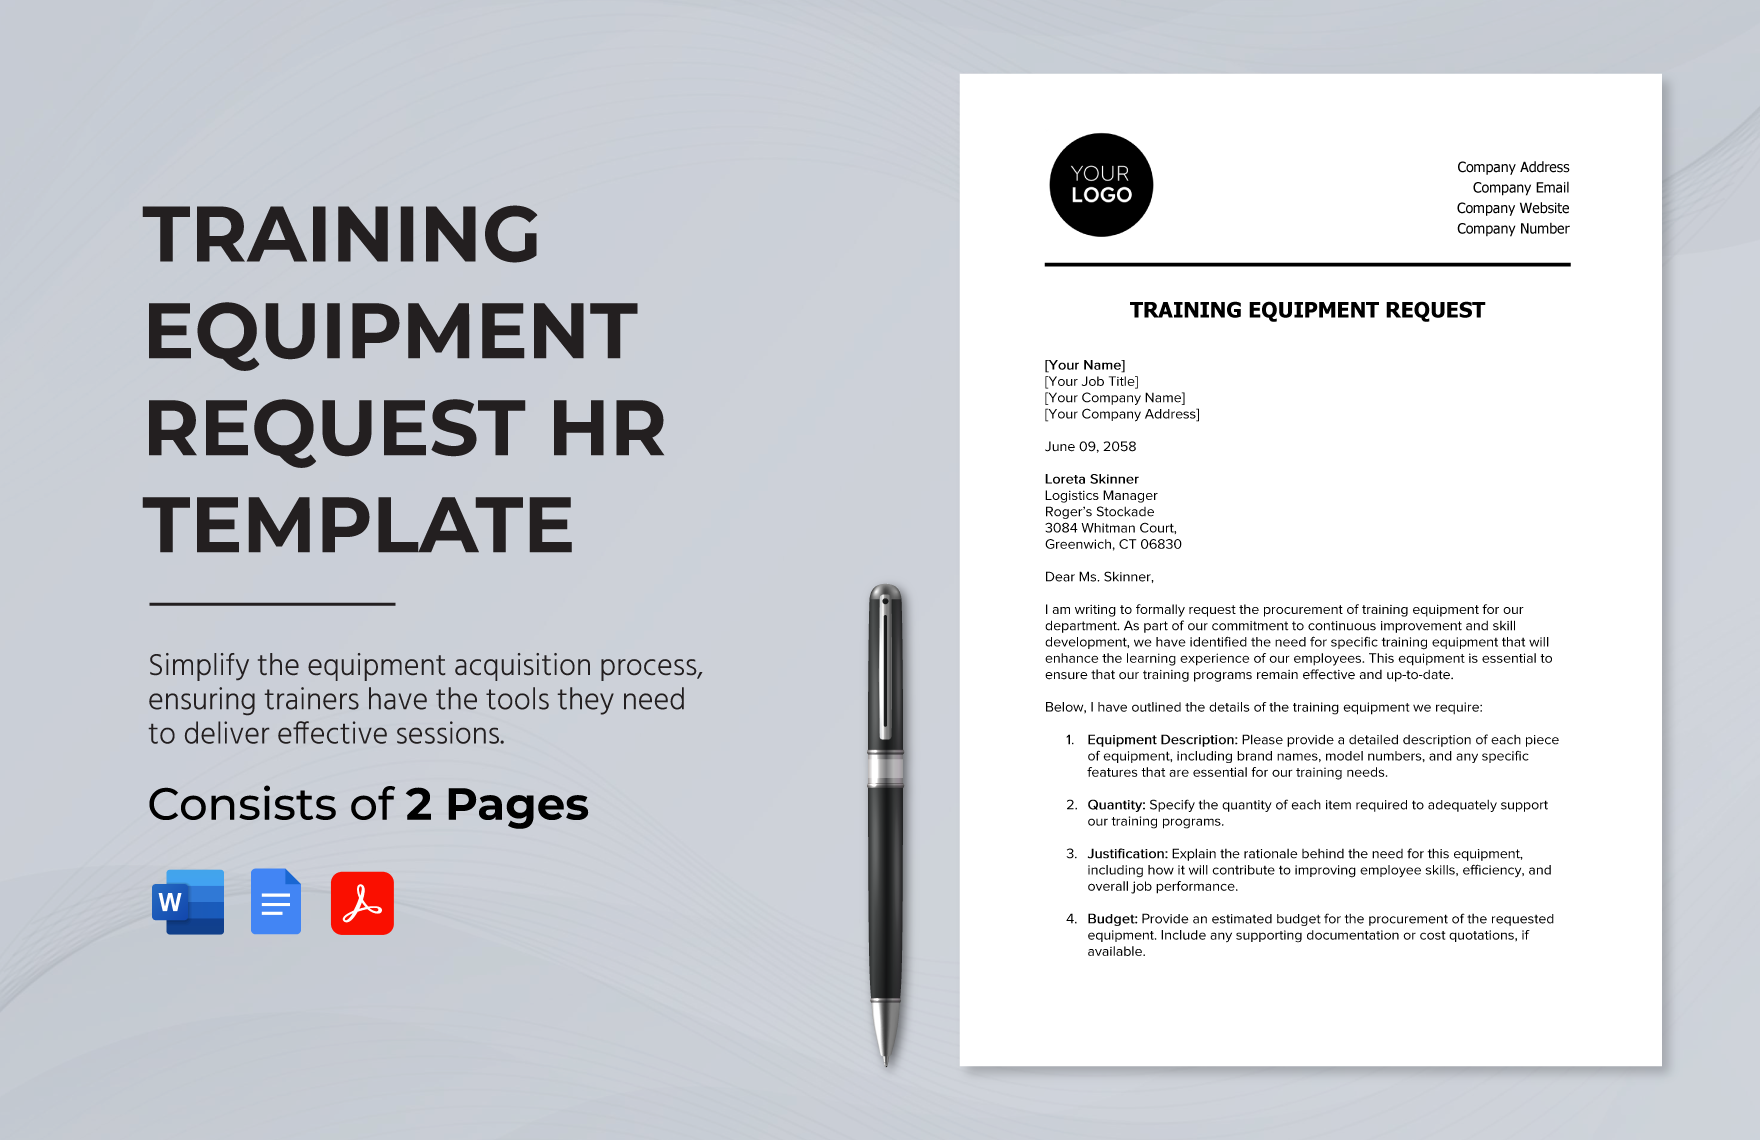 Training Equipment Request HR Template